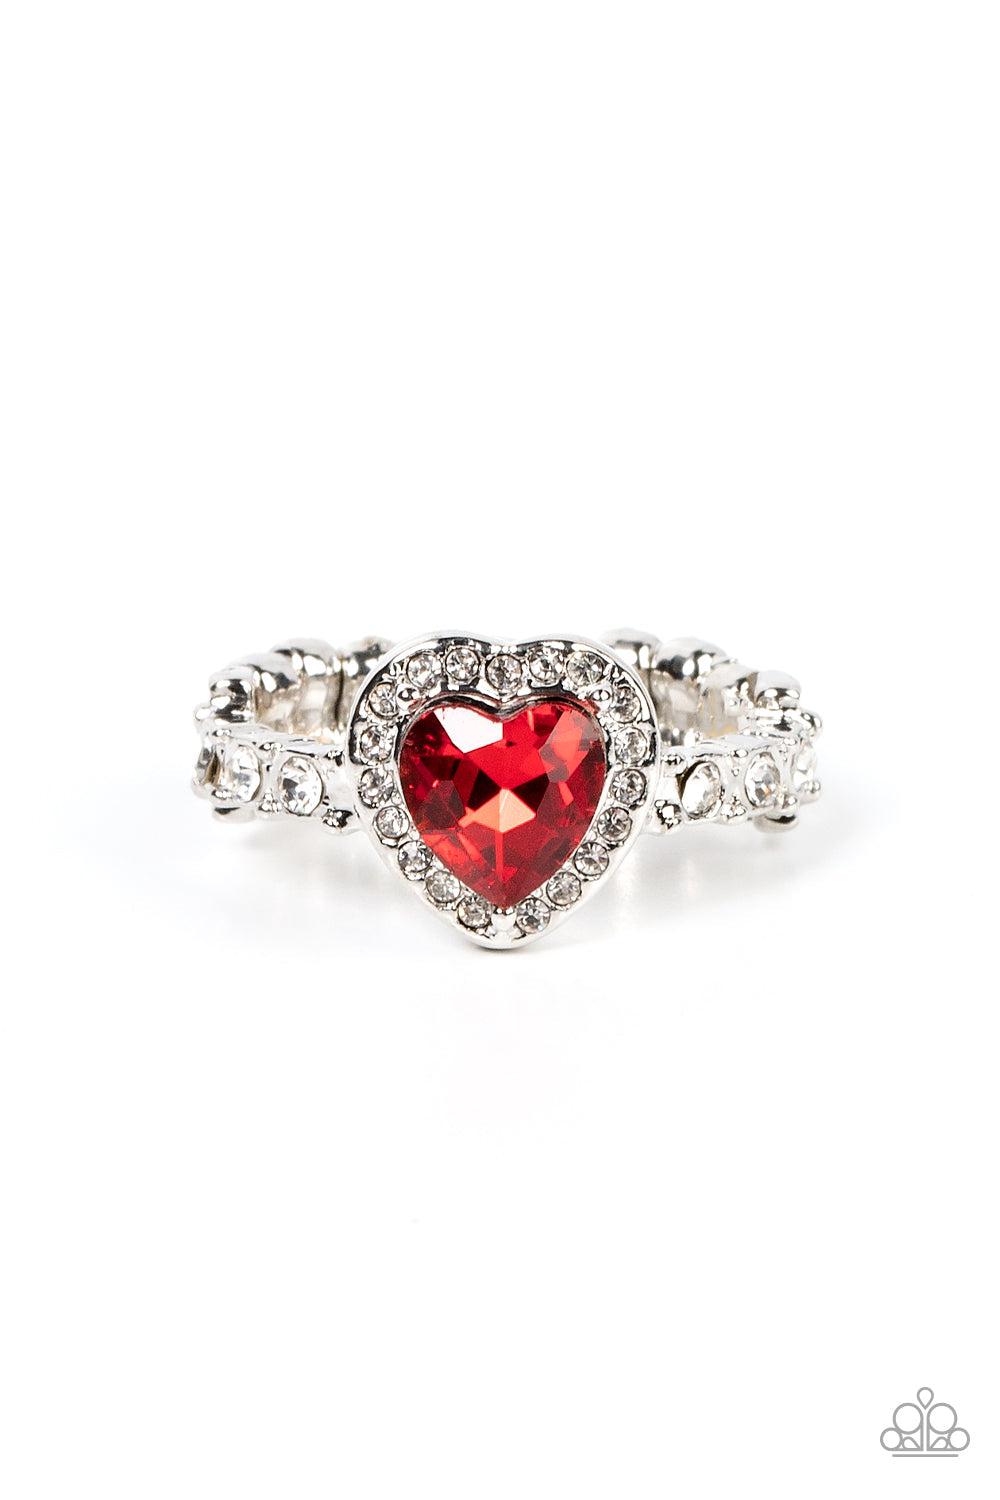 Romantic Reputation Red Rhinestone Heart Ring - Paparazzi Accessories- lightbox - CarasShop.com - $5 Jewelry by Cara Jewels